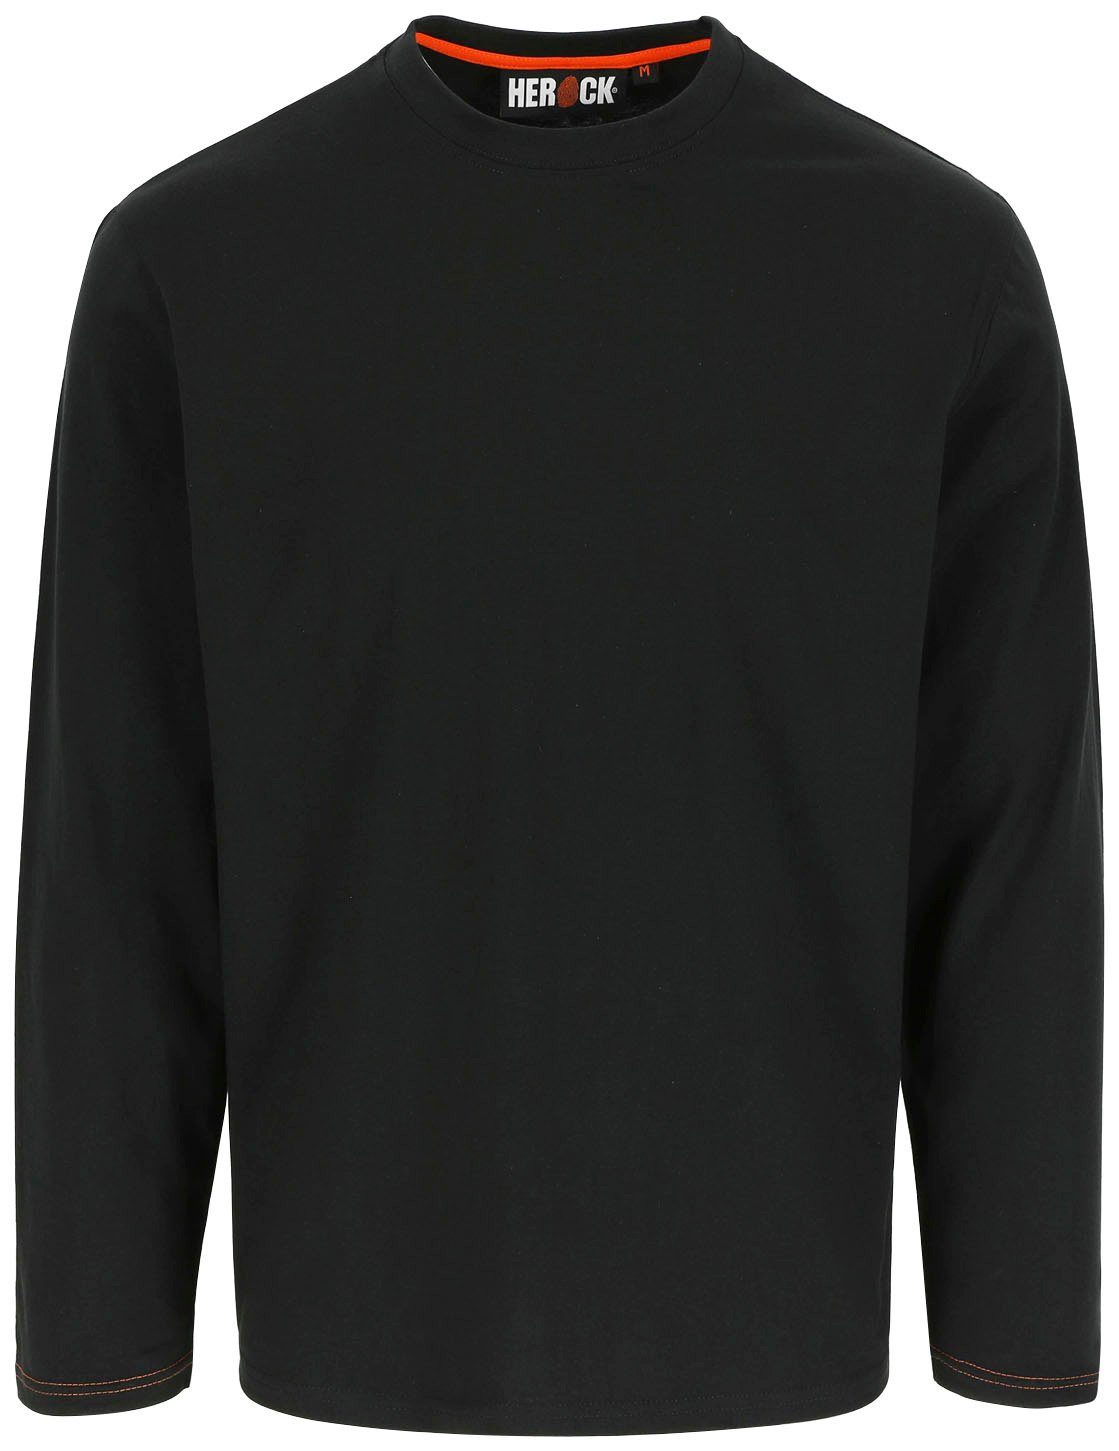 Herock Langarmshirt Noet t-shirt langärmlig Baumwolle, angenehmes Basic 100 Tragegefühl, schwarz % vorgeschrumpfte